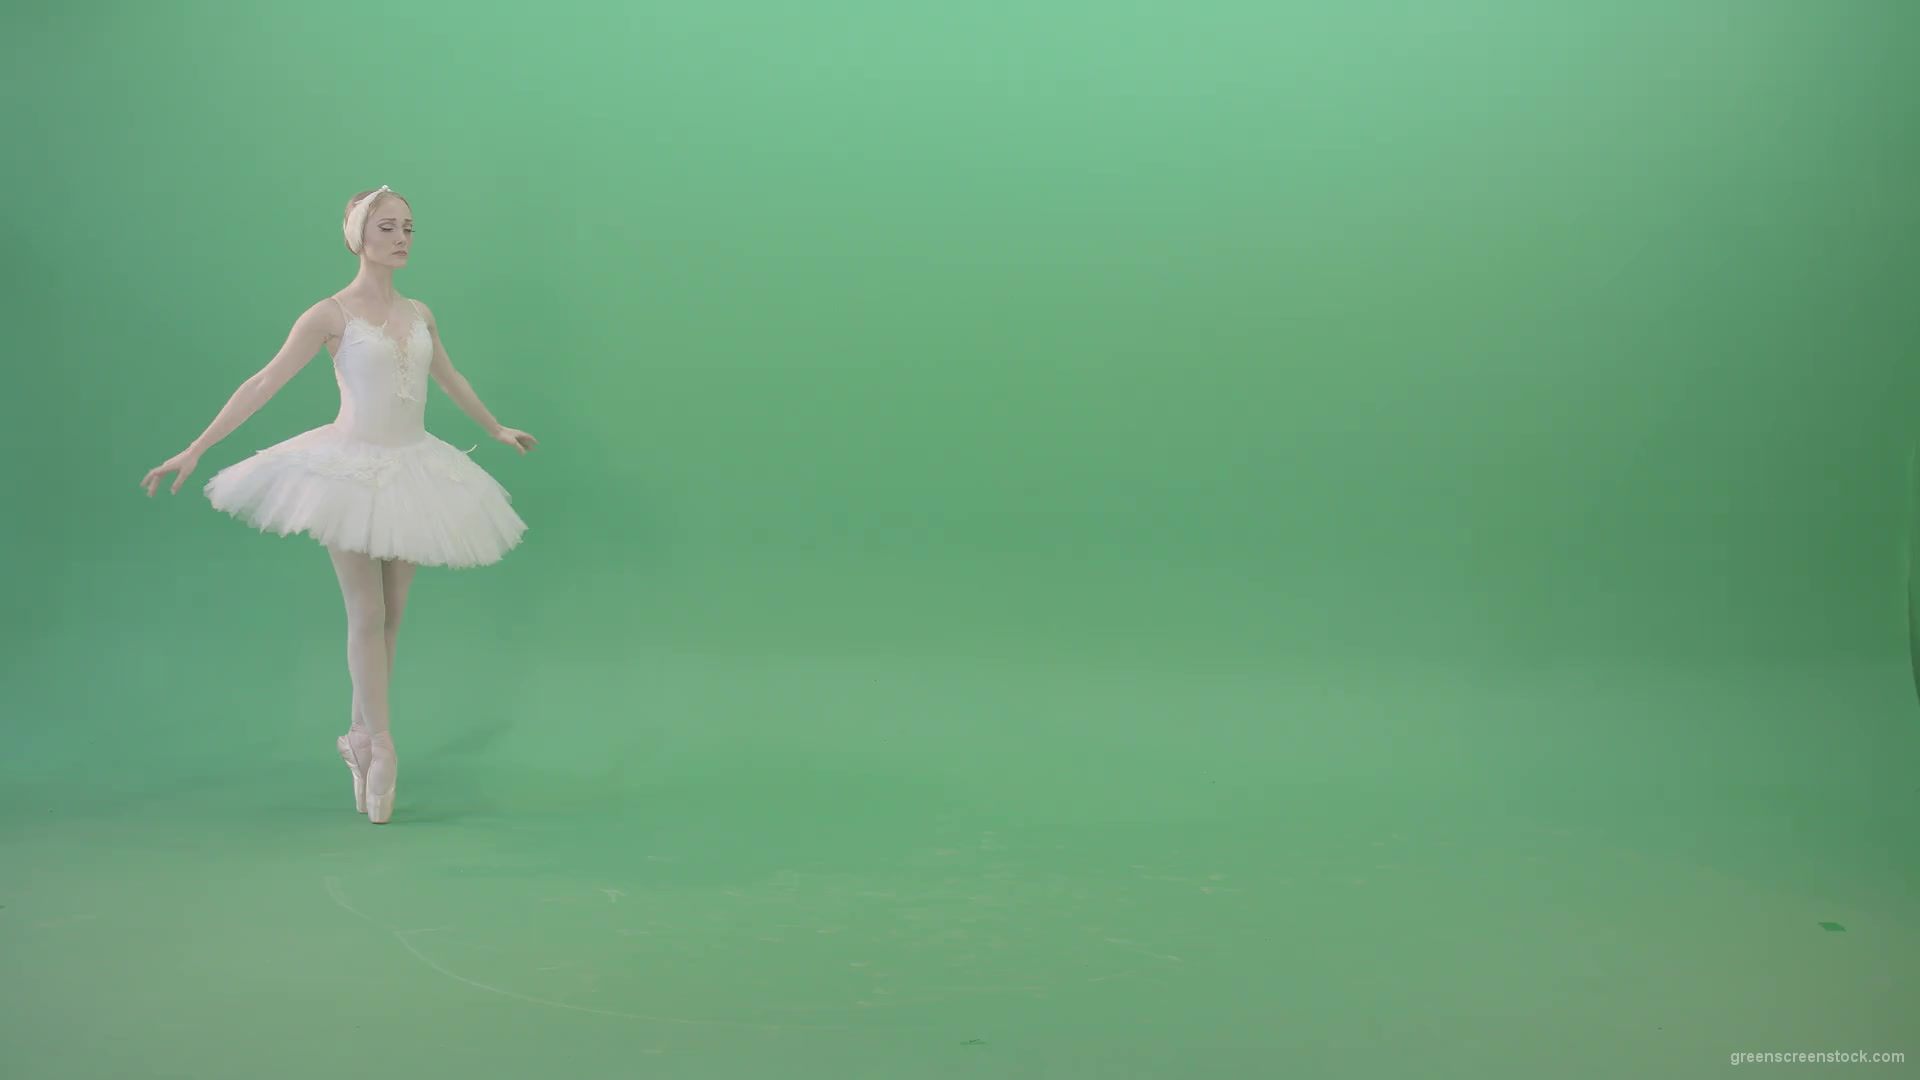 Flying-swan-laken-ballerina-dancing-with-light-on-green-screen-chroma-key-4K-Video-Footage-1920_001 Green Screen Stock